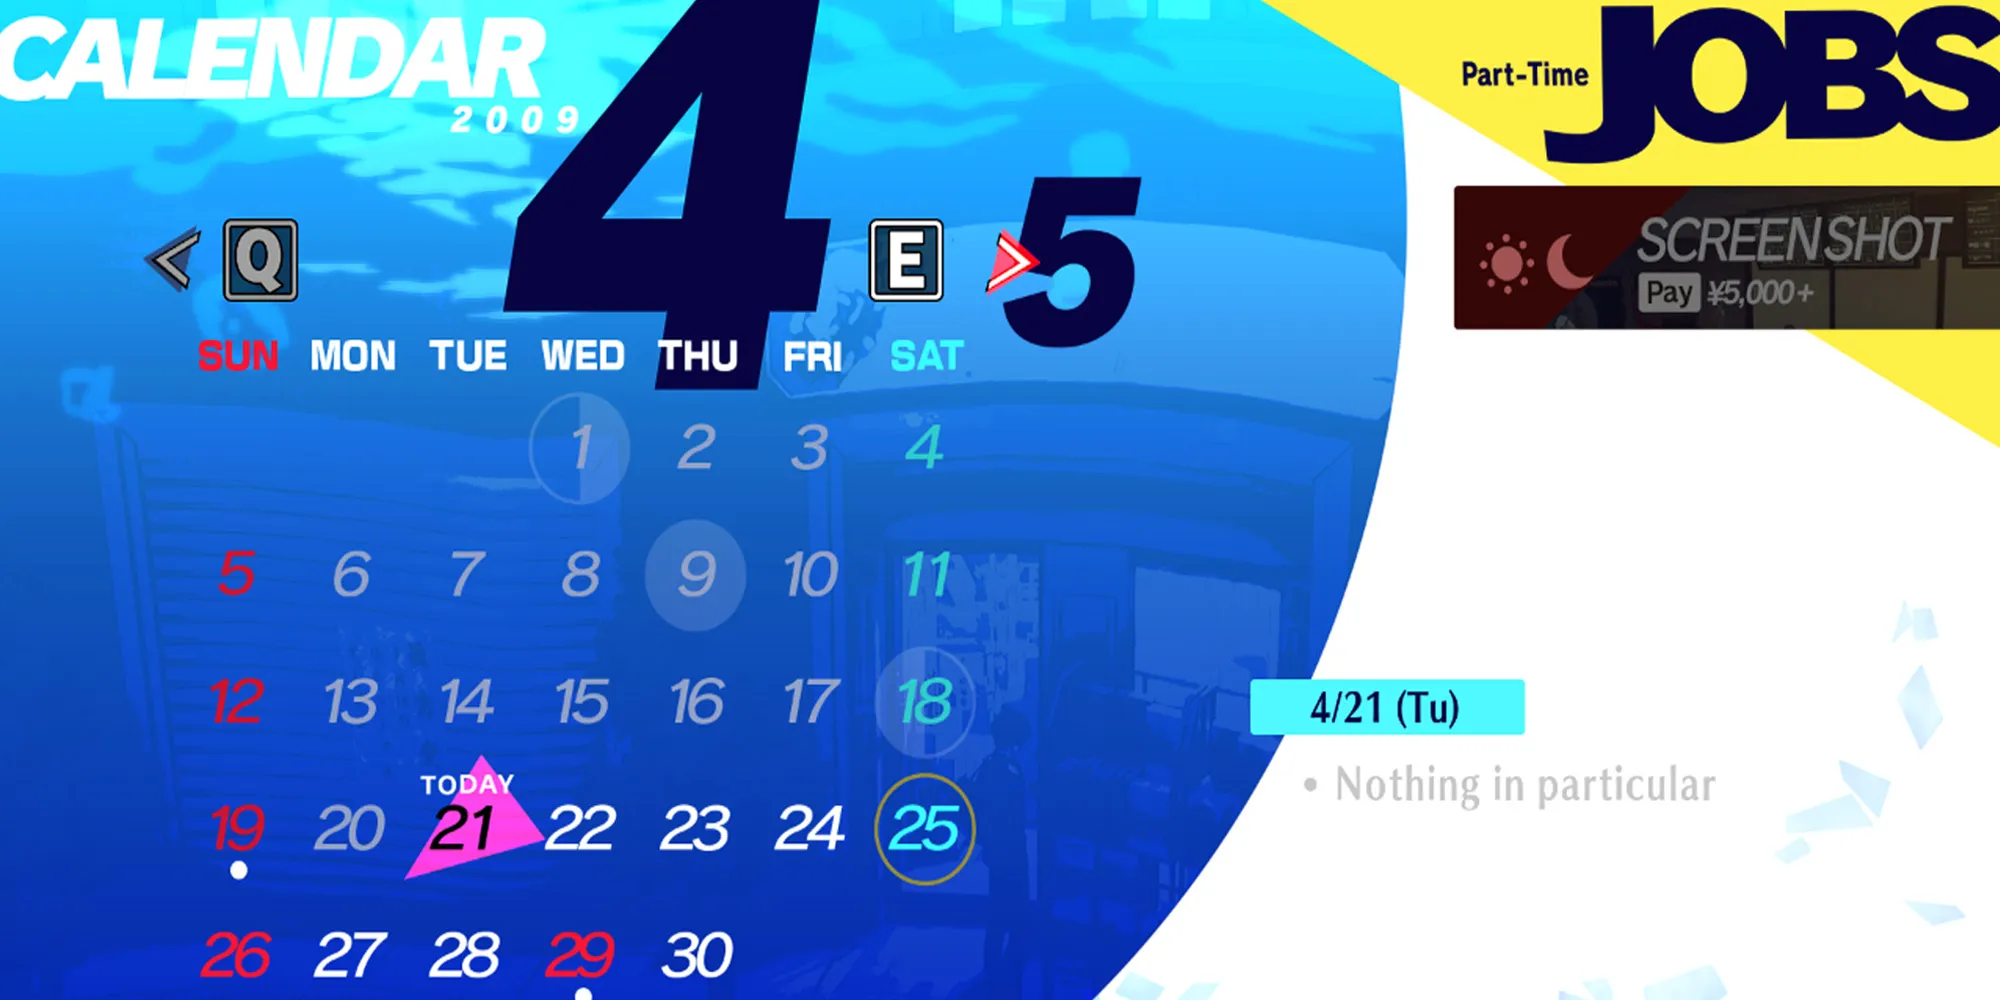 Persona 3 Reload P3R Calendar Guide for April 2009